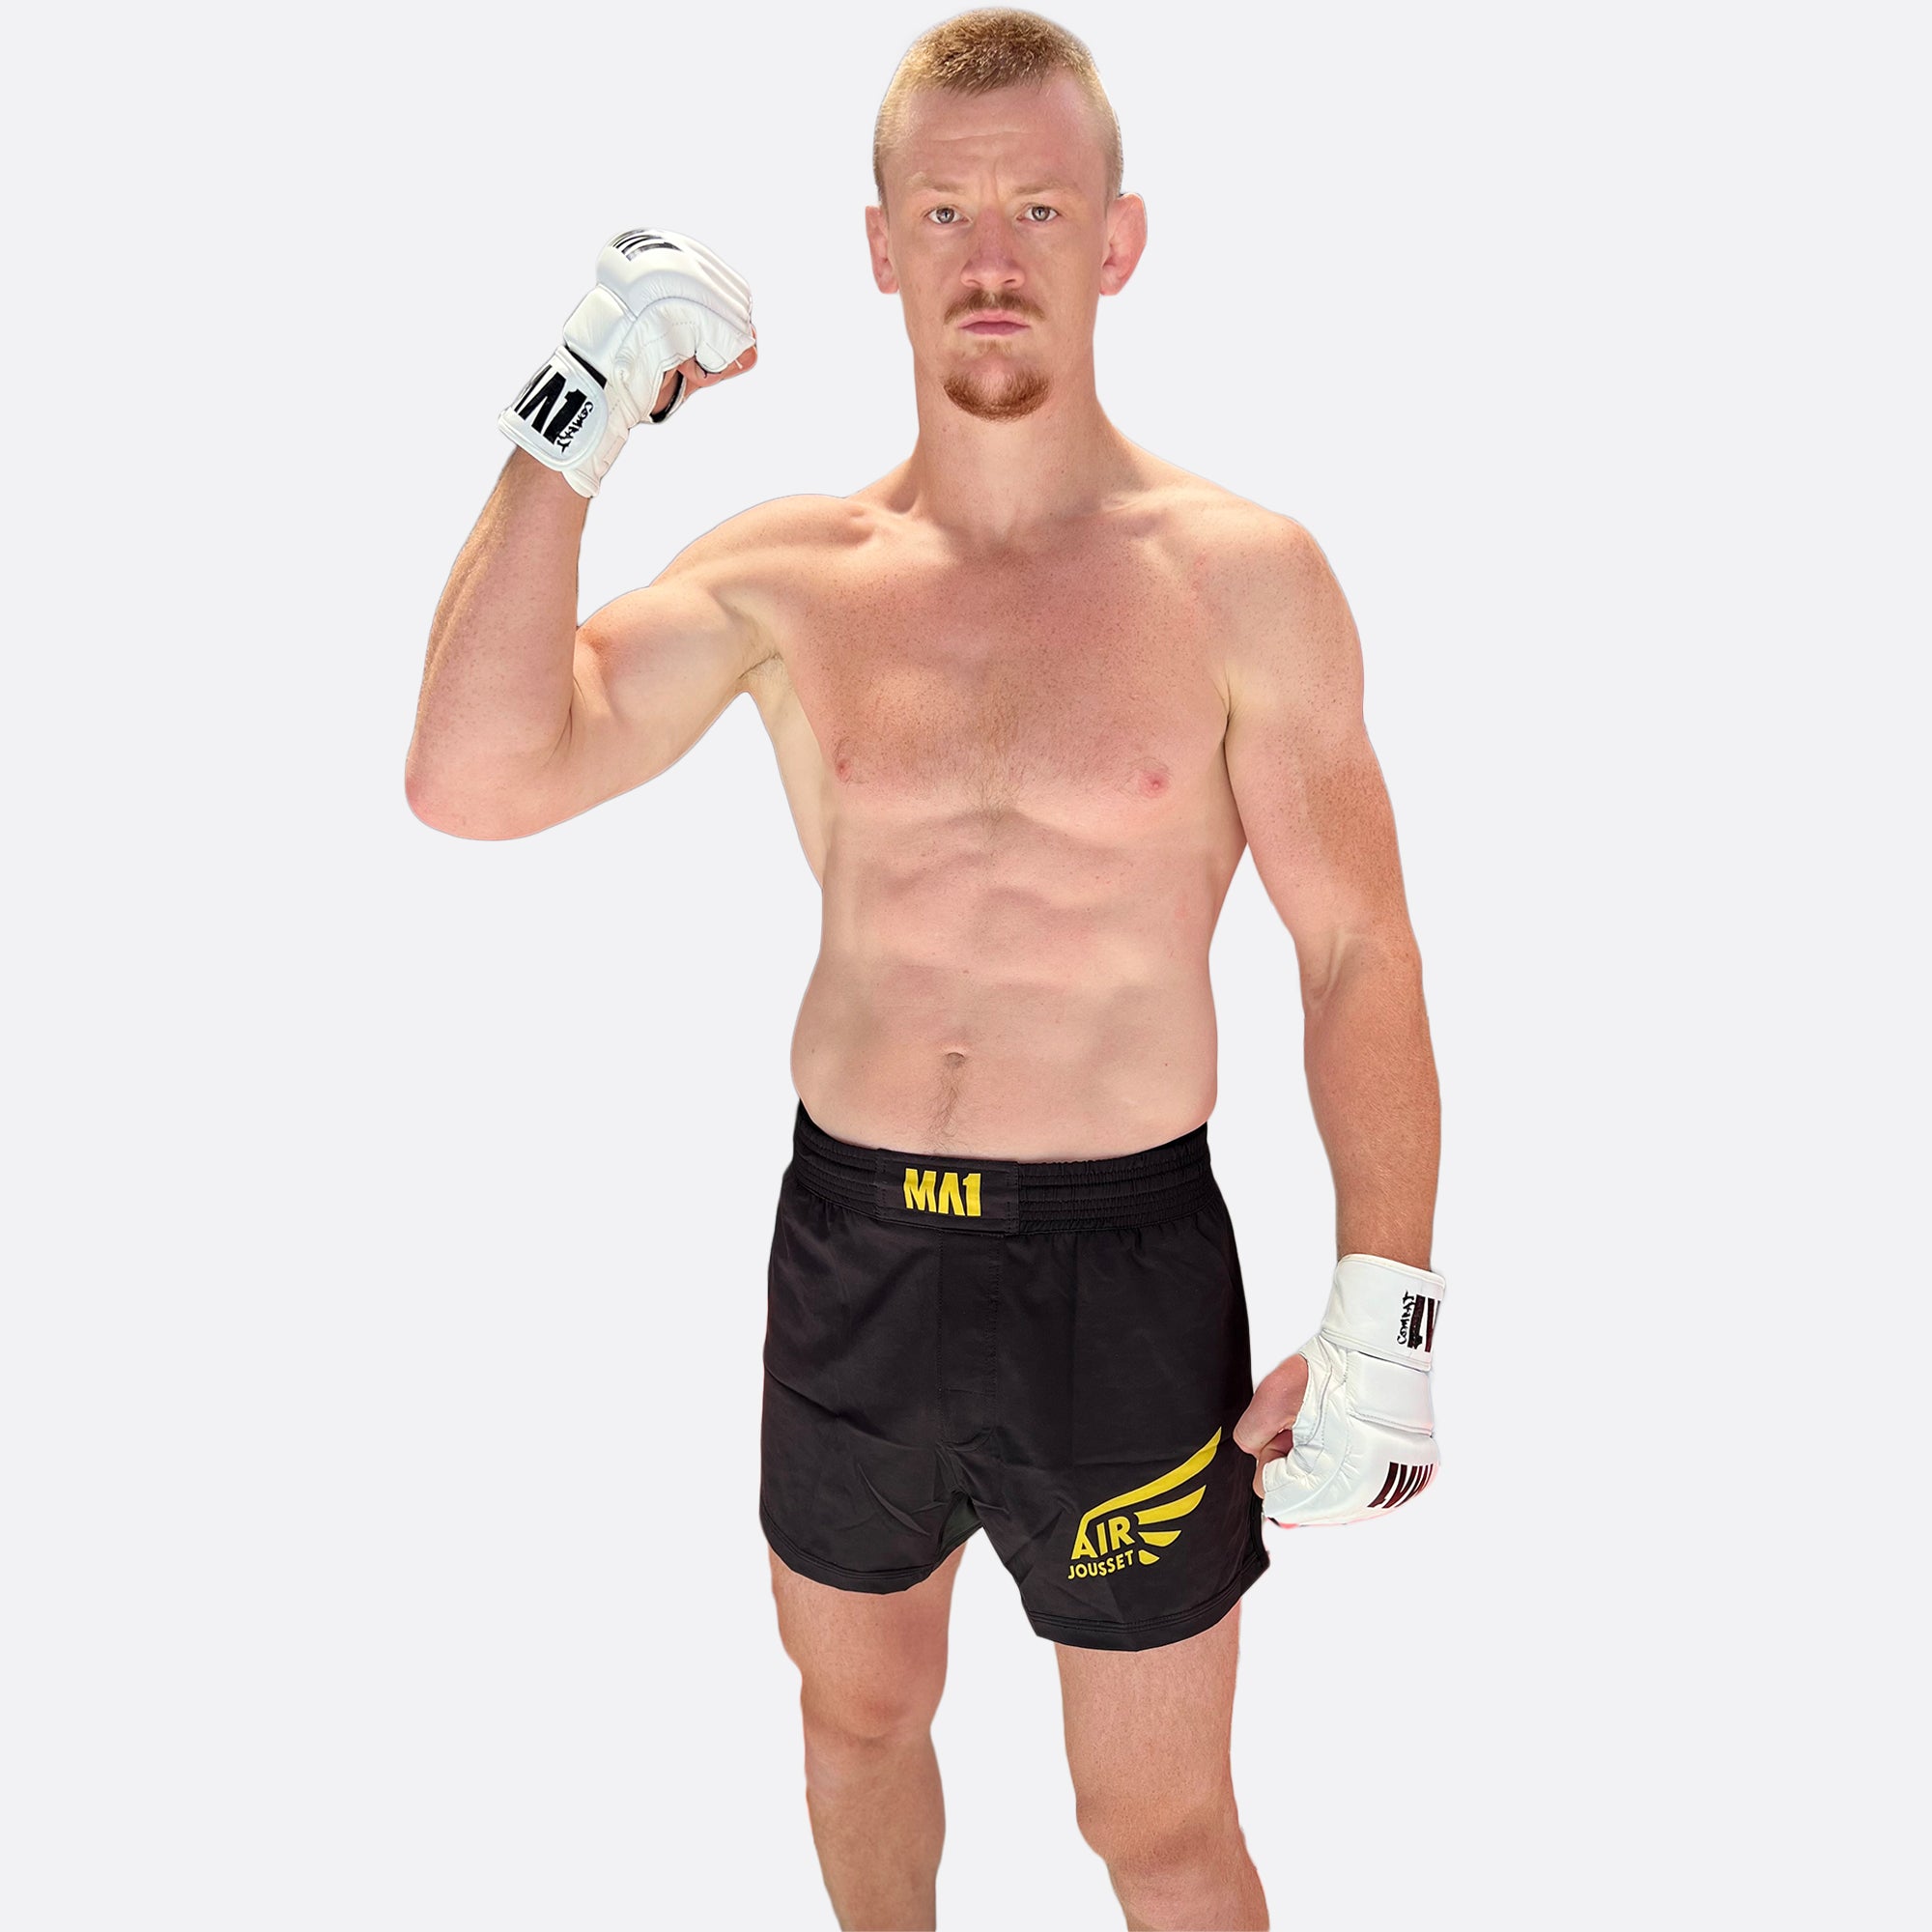 MA1 Kevin Air Jousset High Cut MMA Shorts